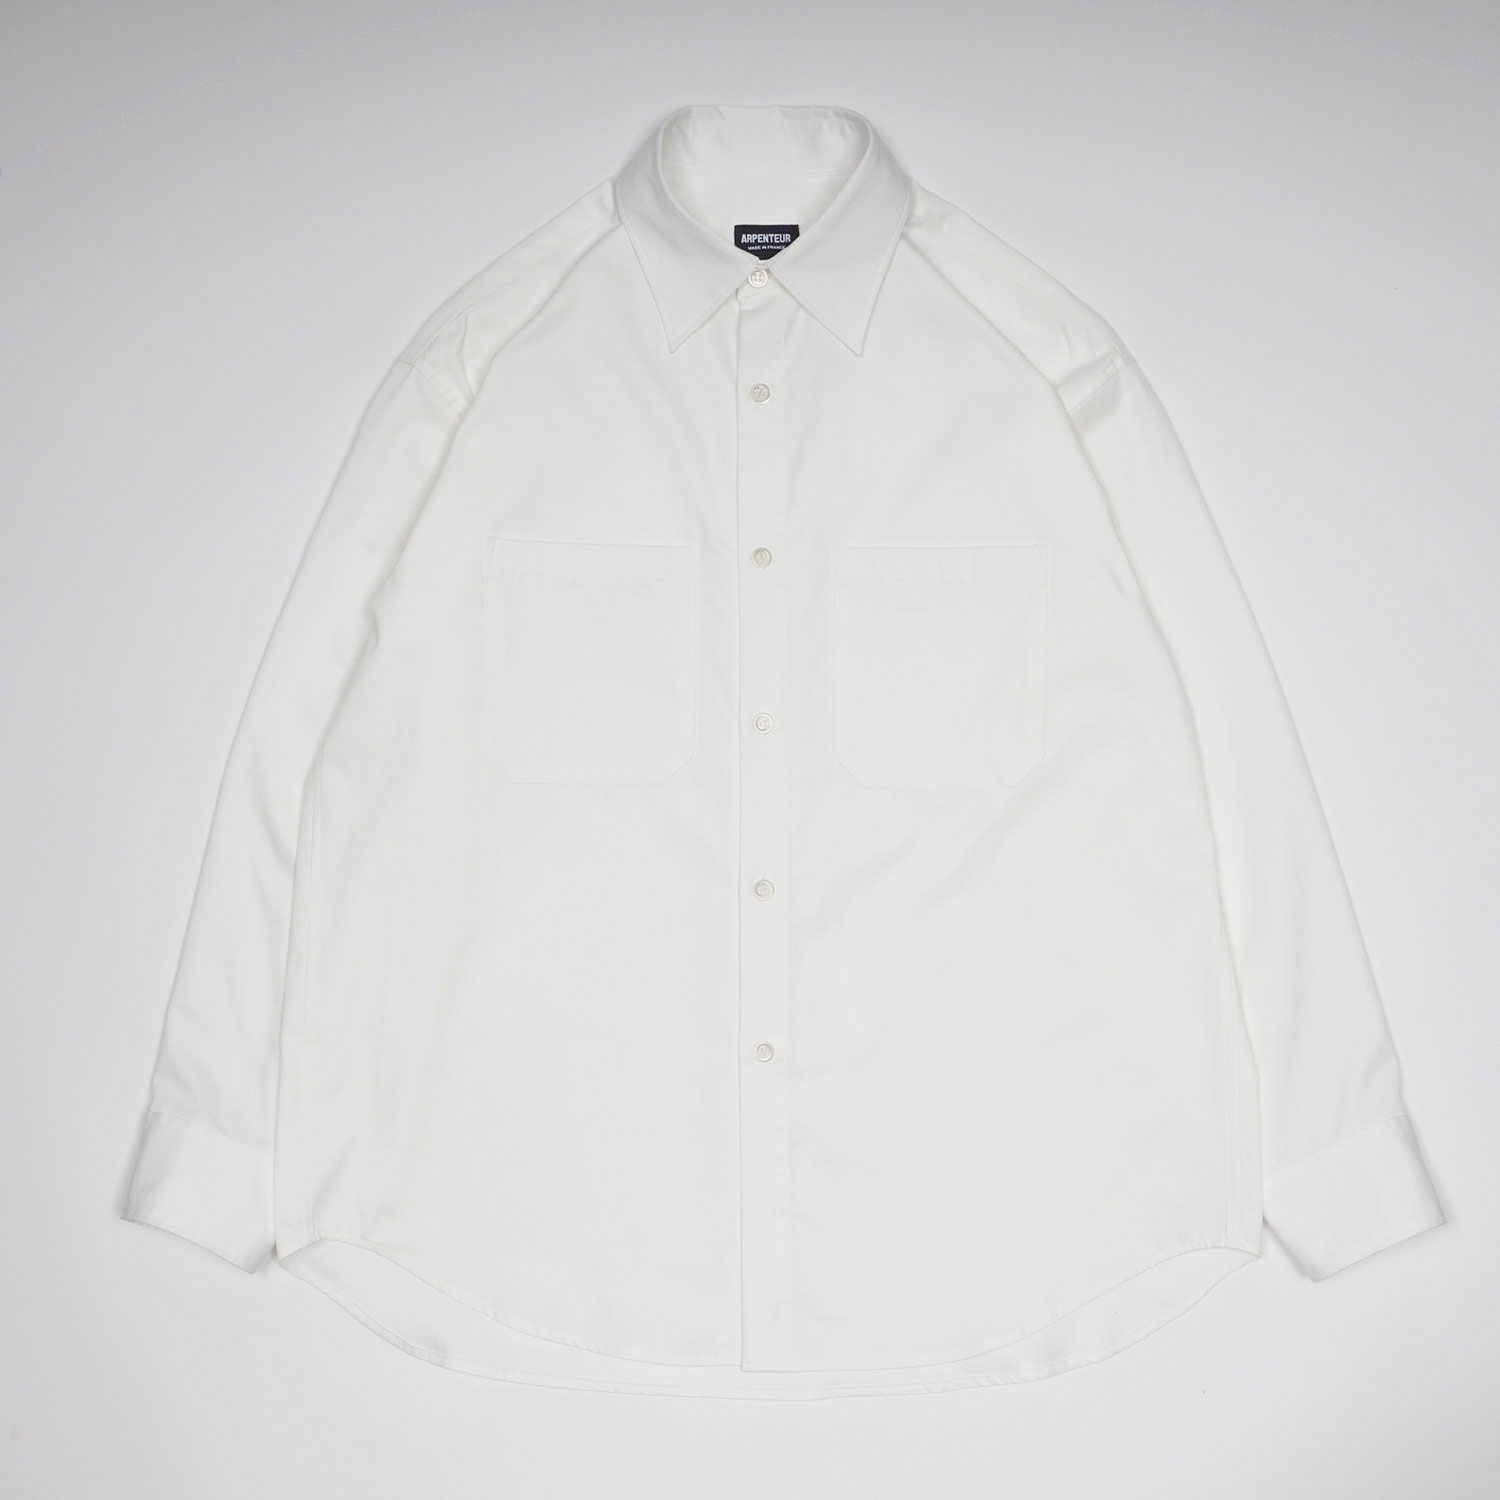 DORIS shirt in White color by Arpenteur